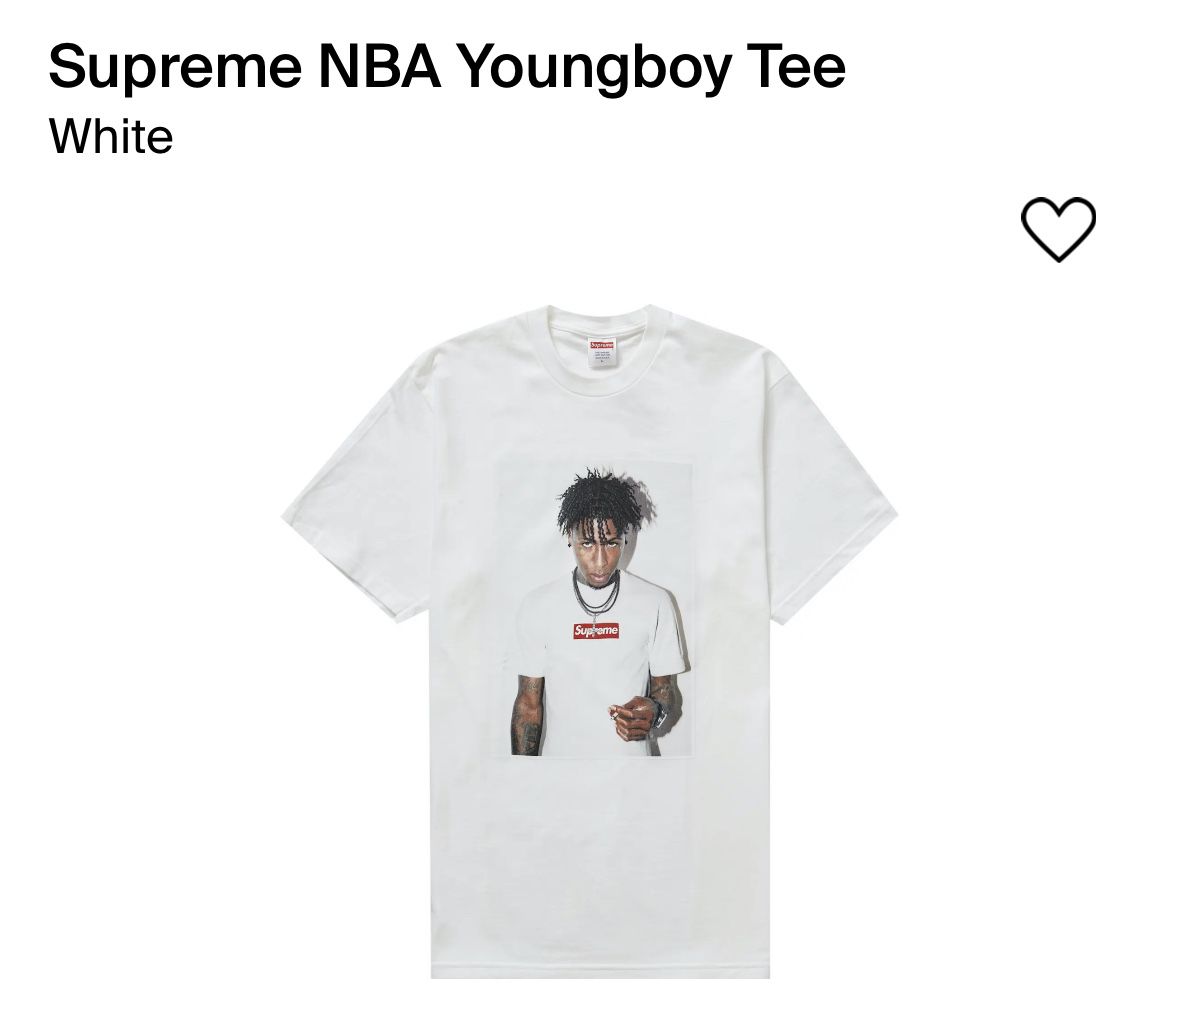 Supreme NBA Youngboy Tee Black